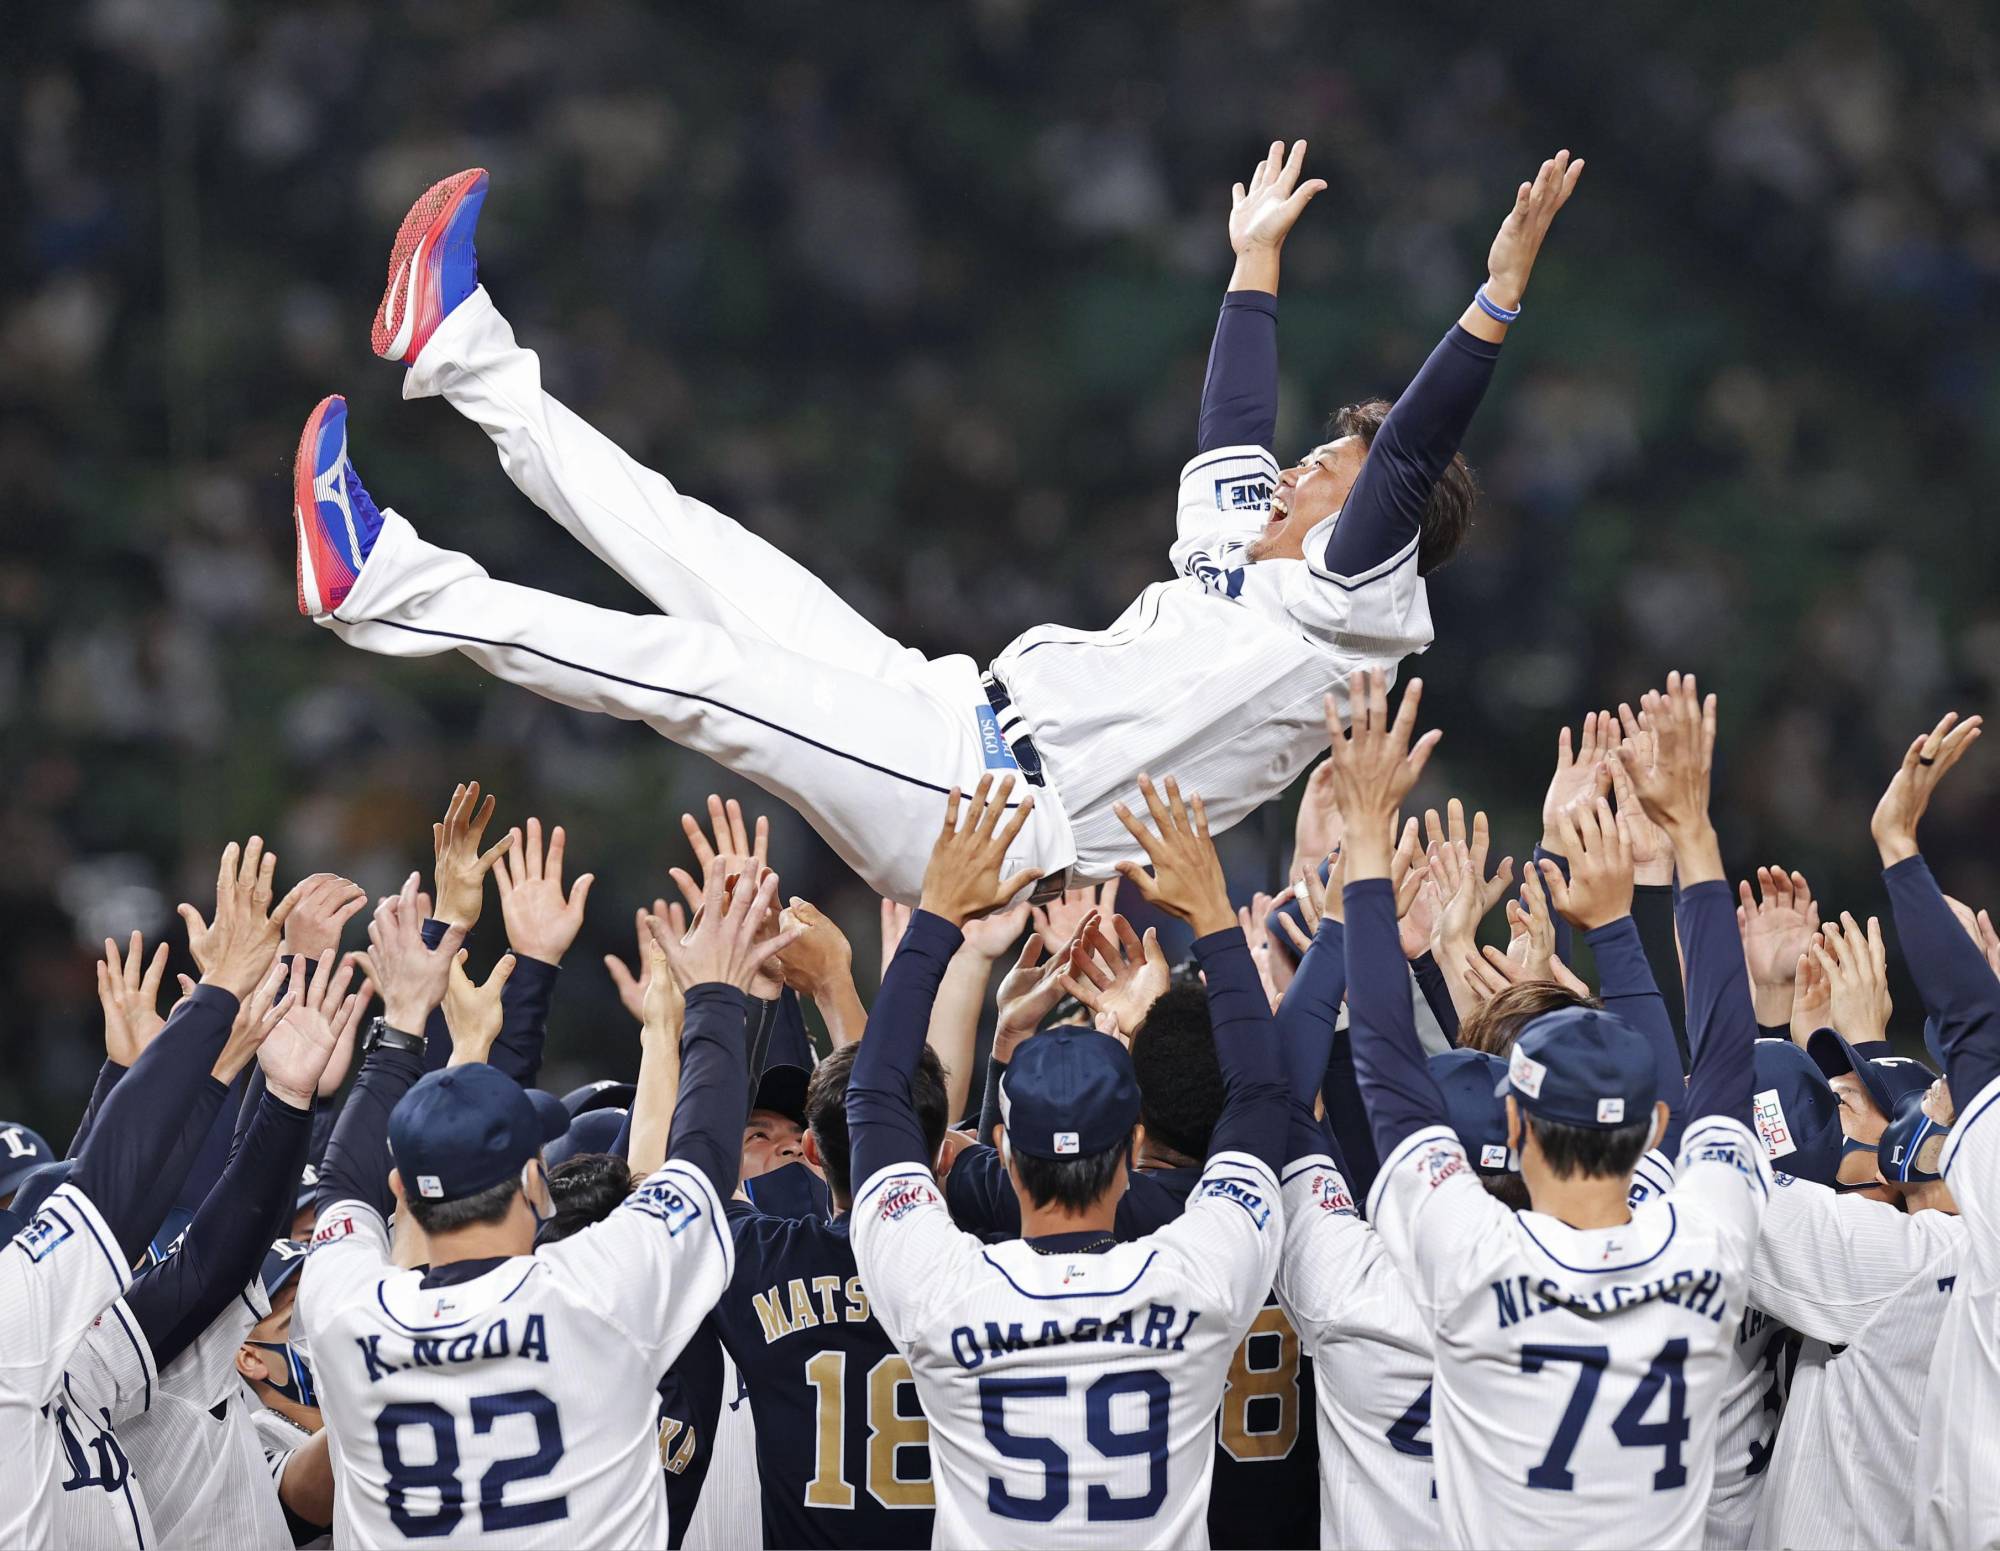 Daisuke Matsuzaka walks away from baseball with love for game - The Japan  Times